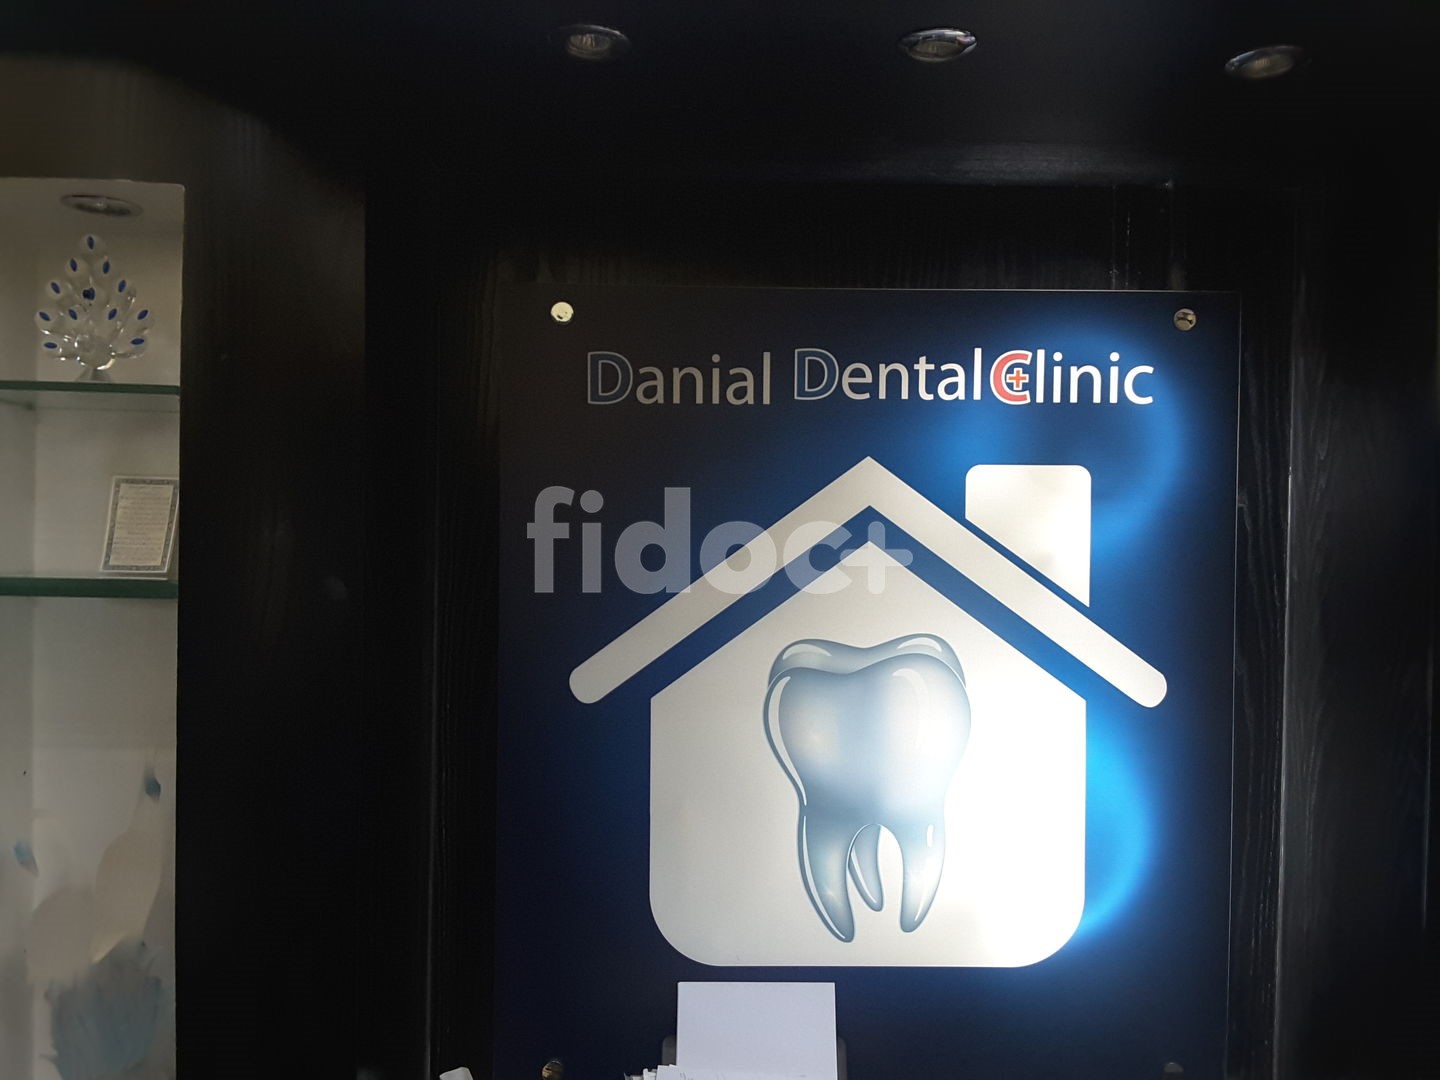 Danial Dental Clinic, Dubai